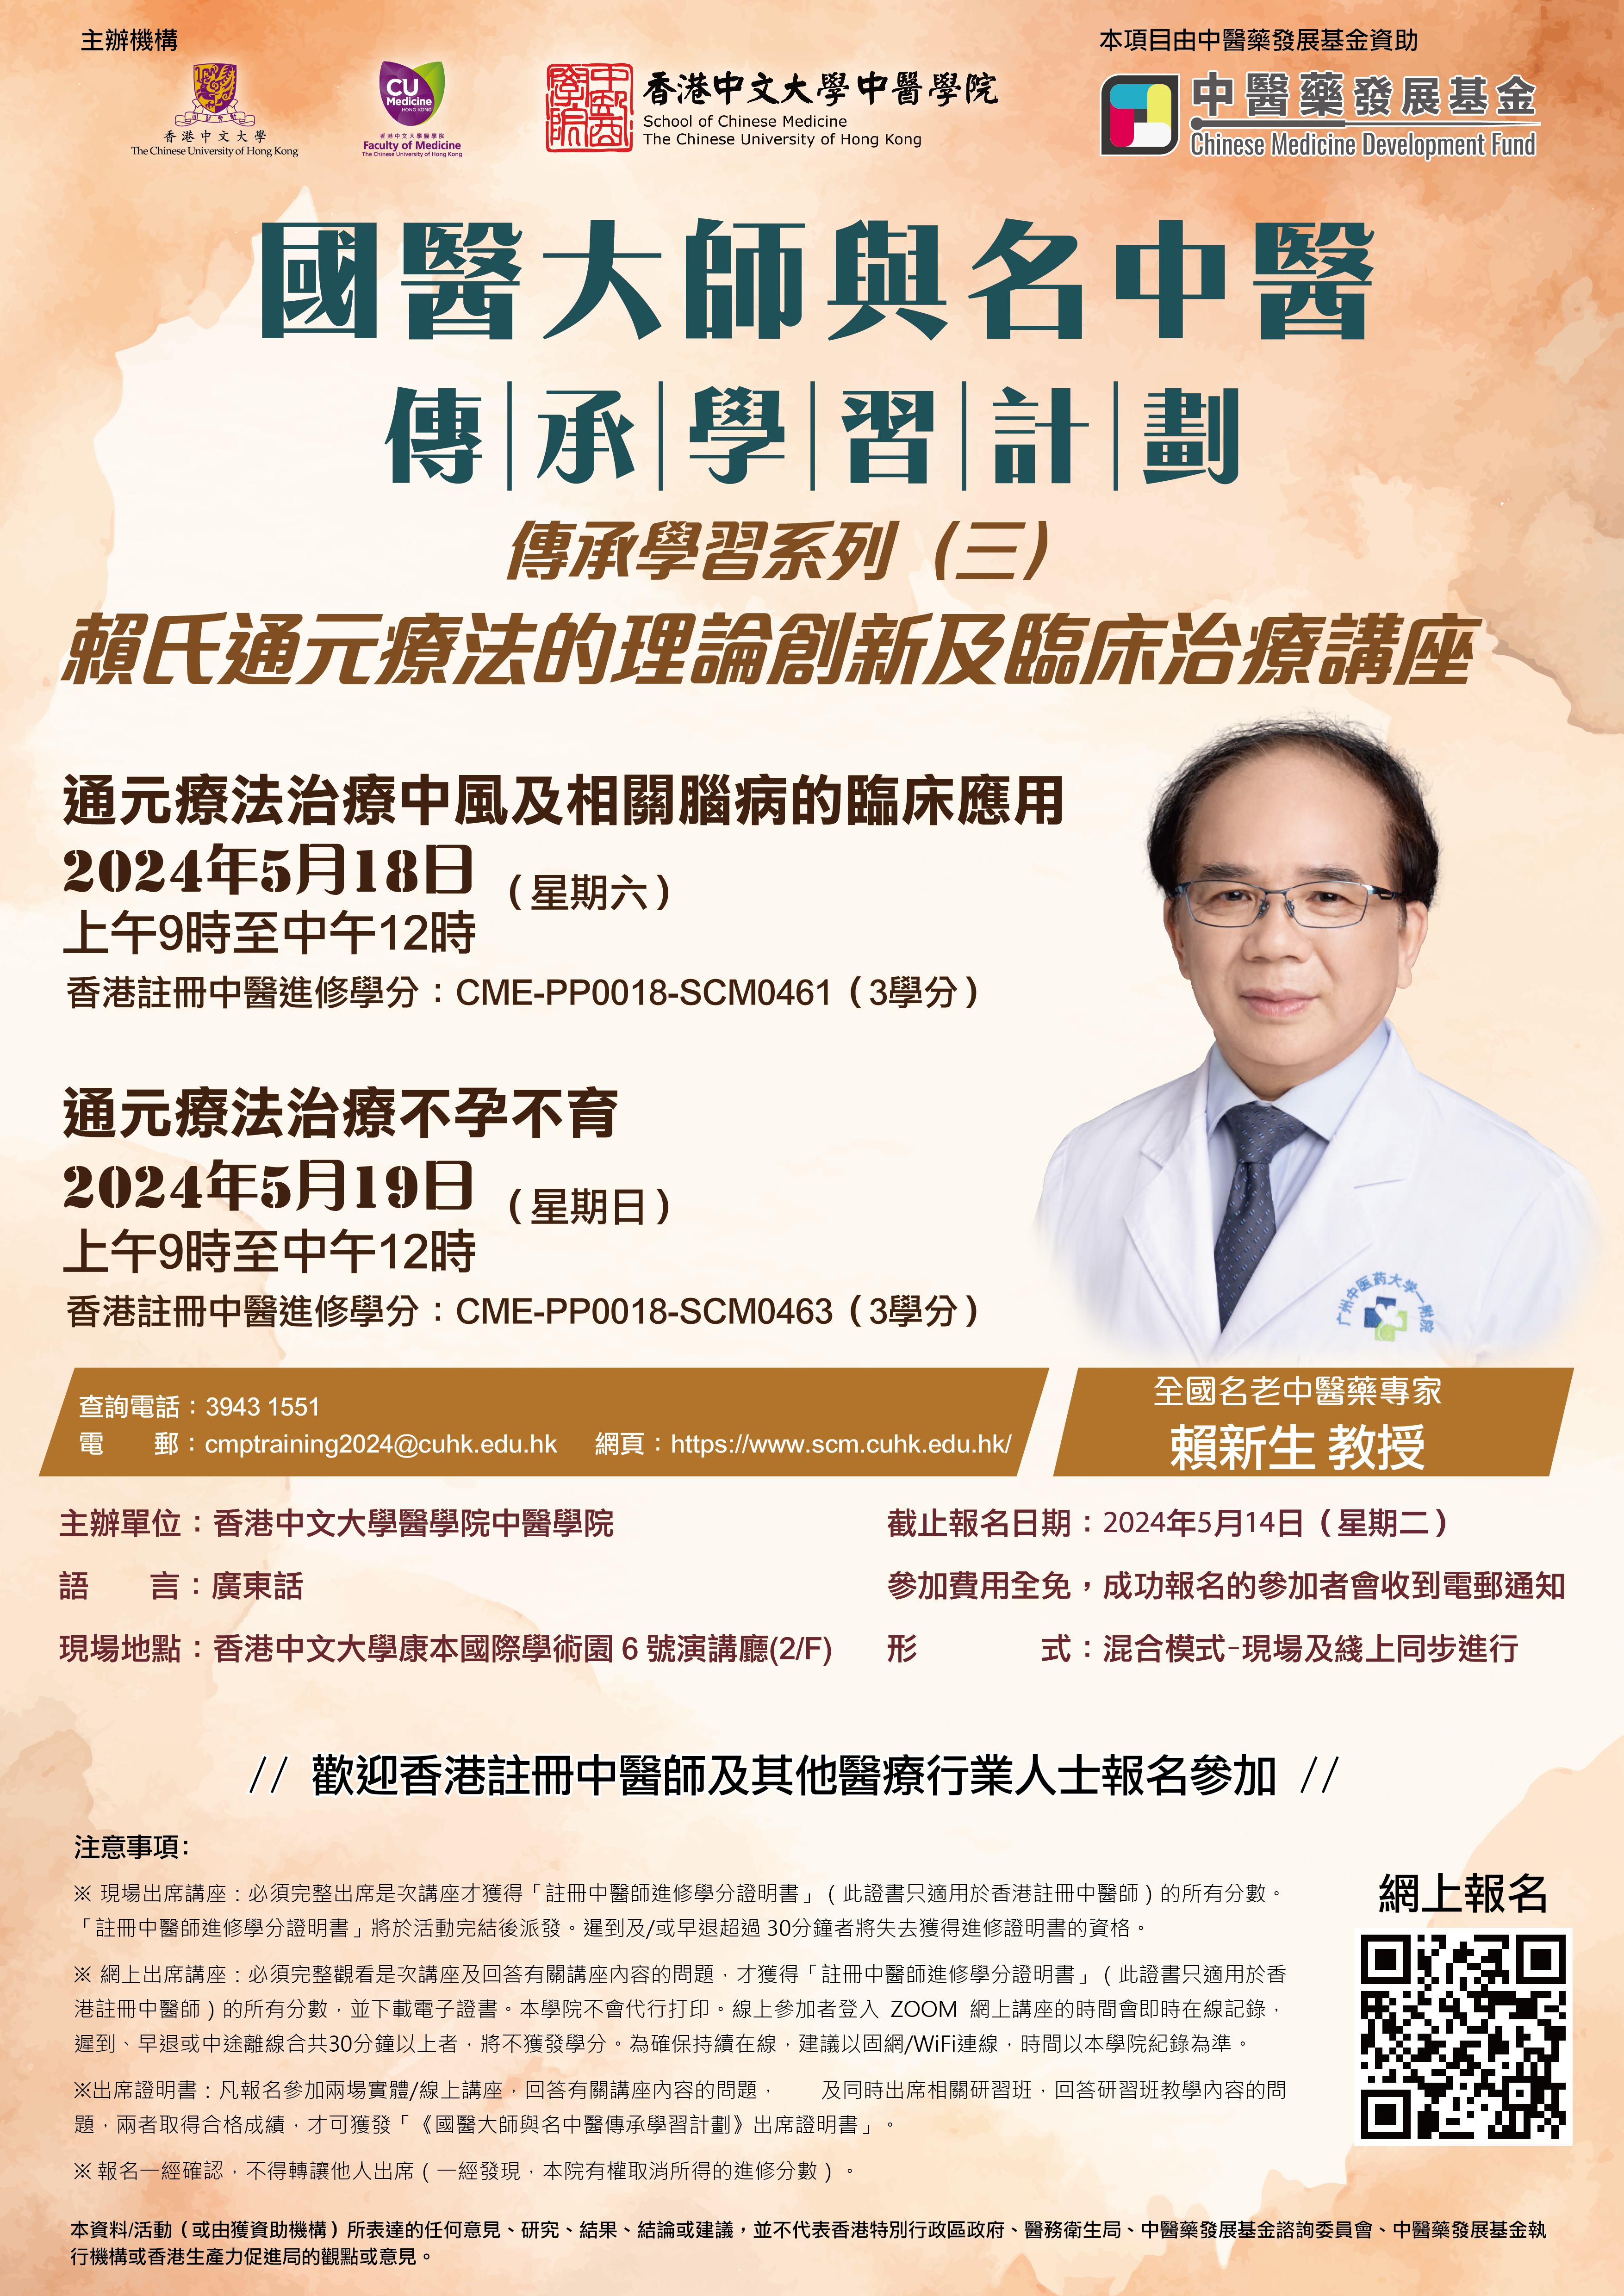 https://www.scm.cuhk.edu.hk/zh-tw/articles/248-latest-news/2752-2024-02-01-tc